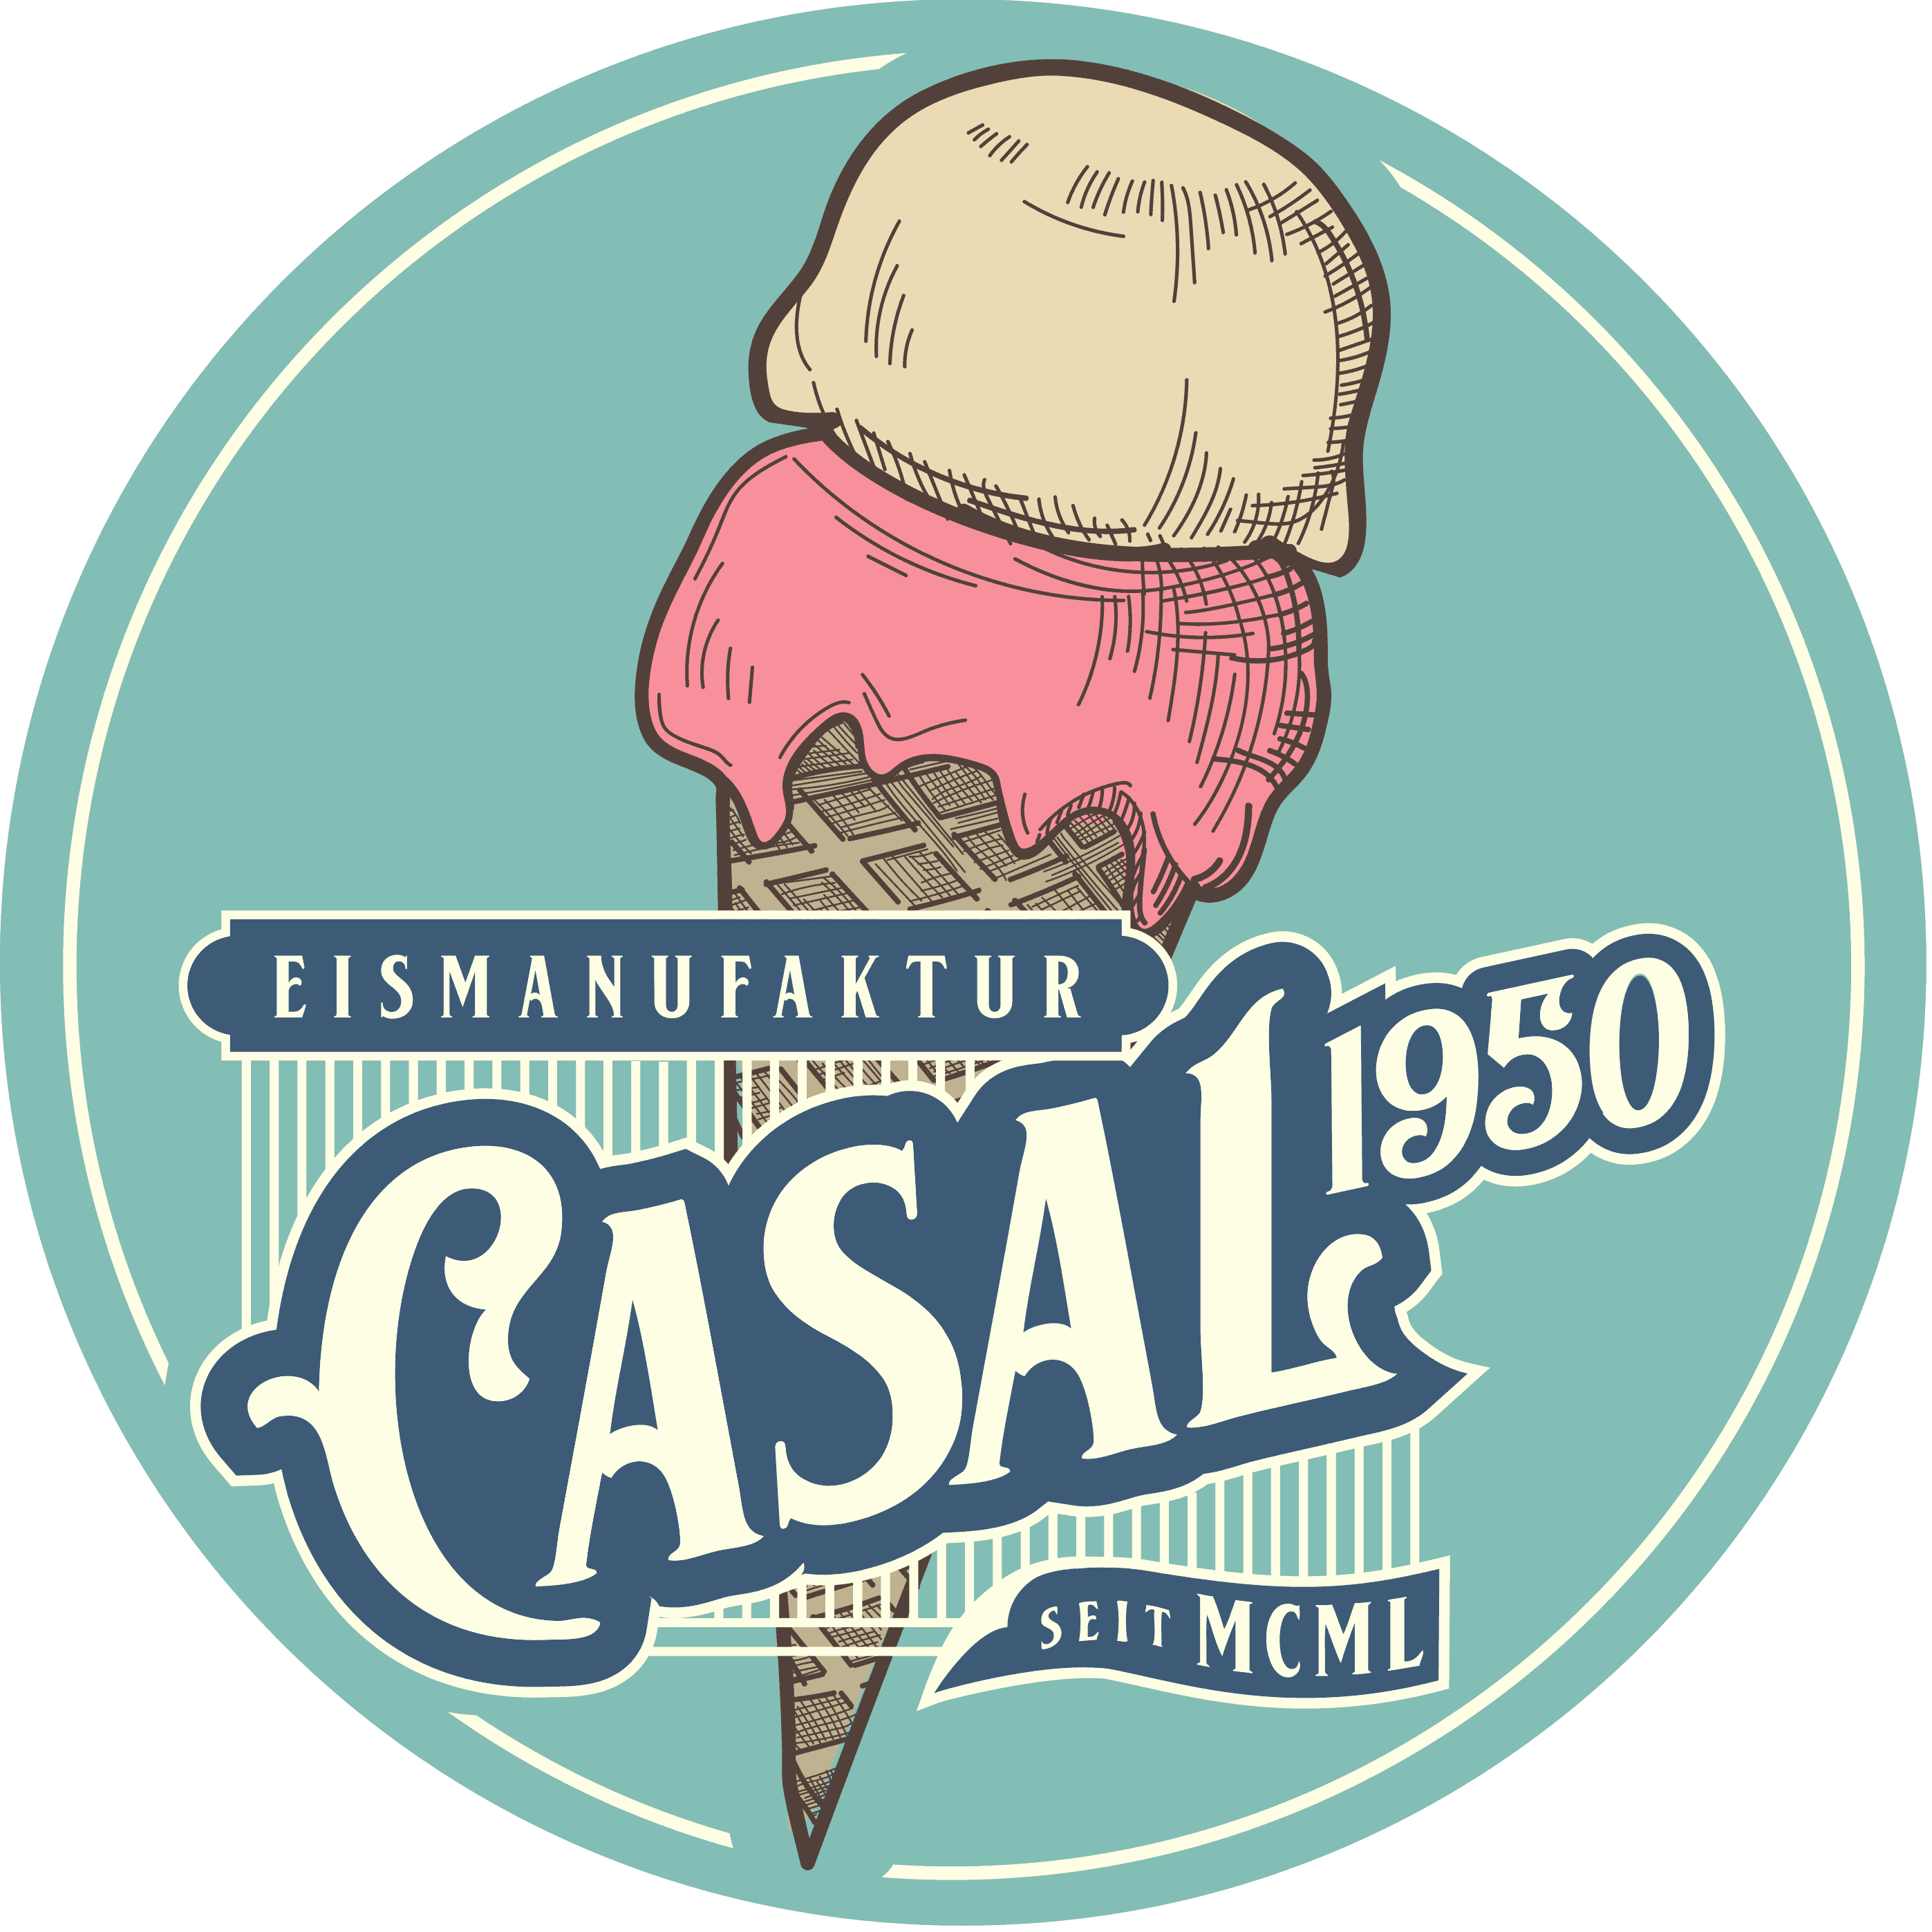 Casal Eis Wiesbaden – Seit 1950